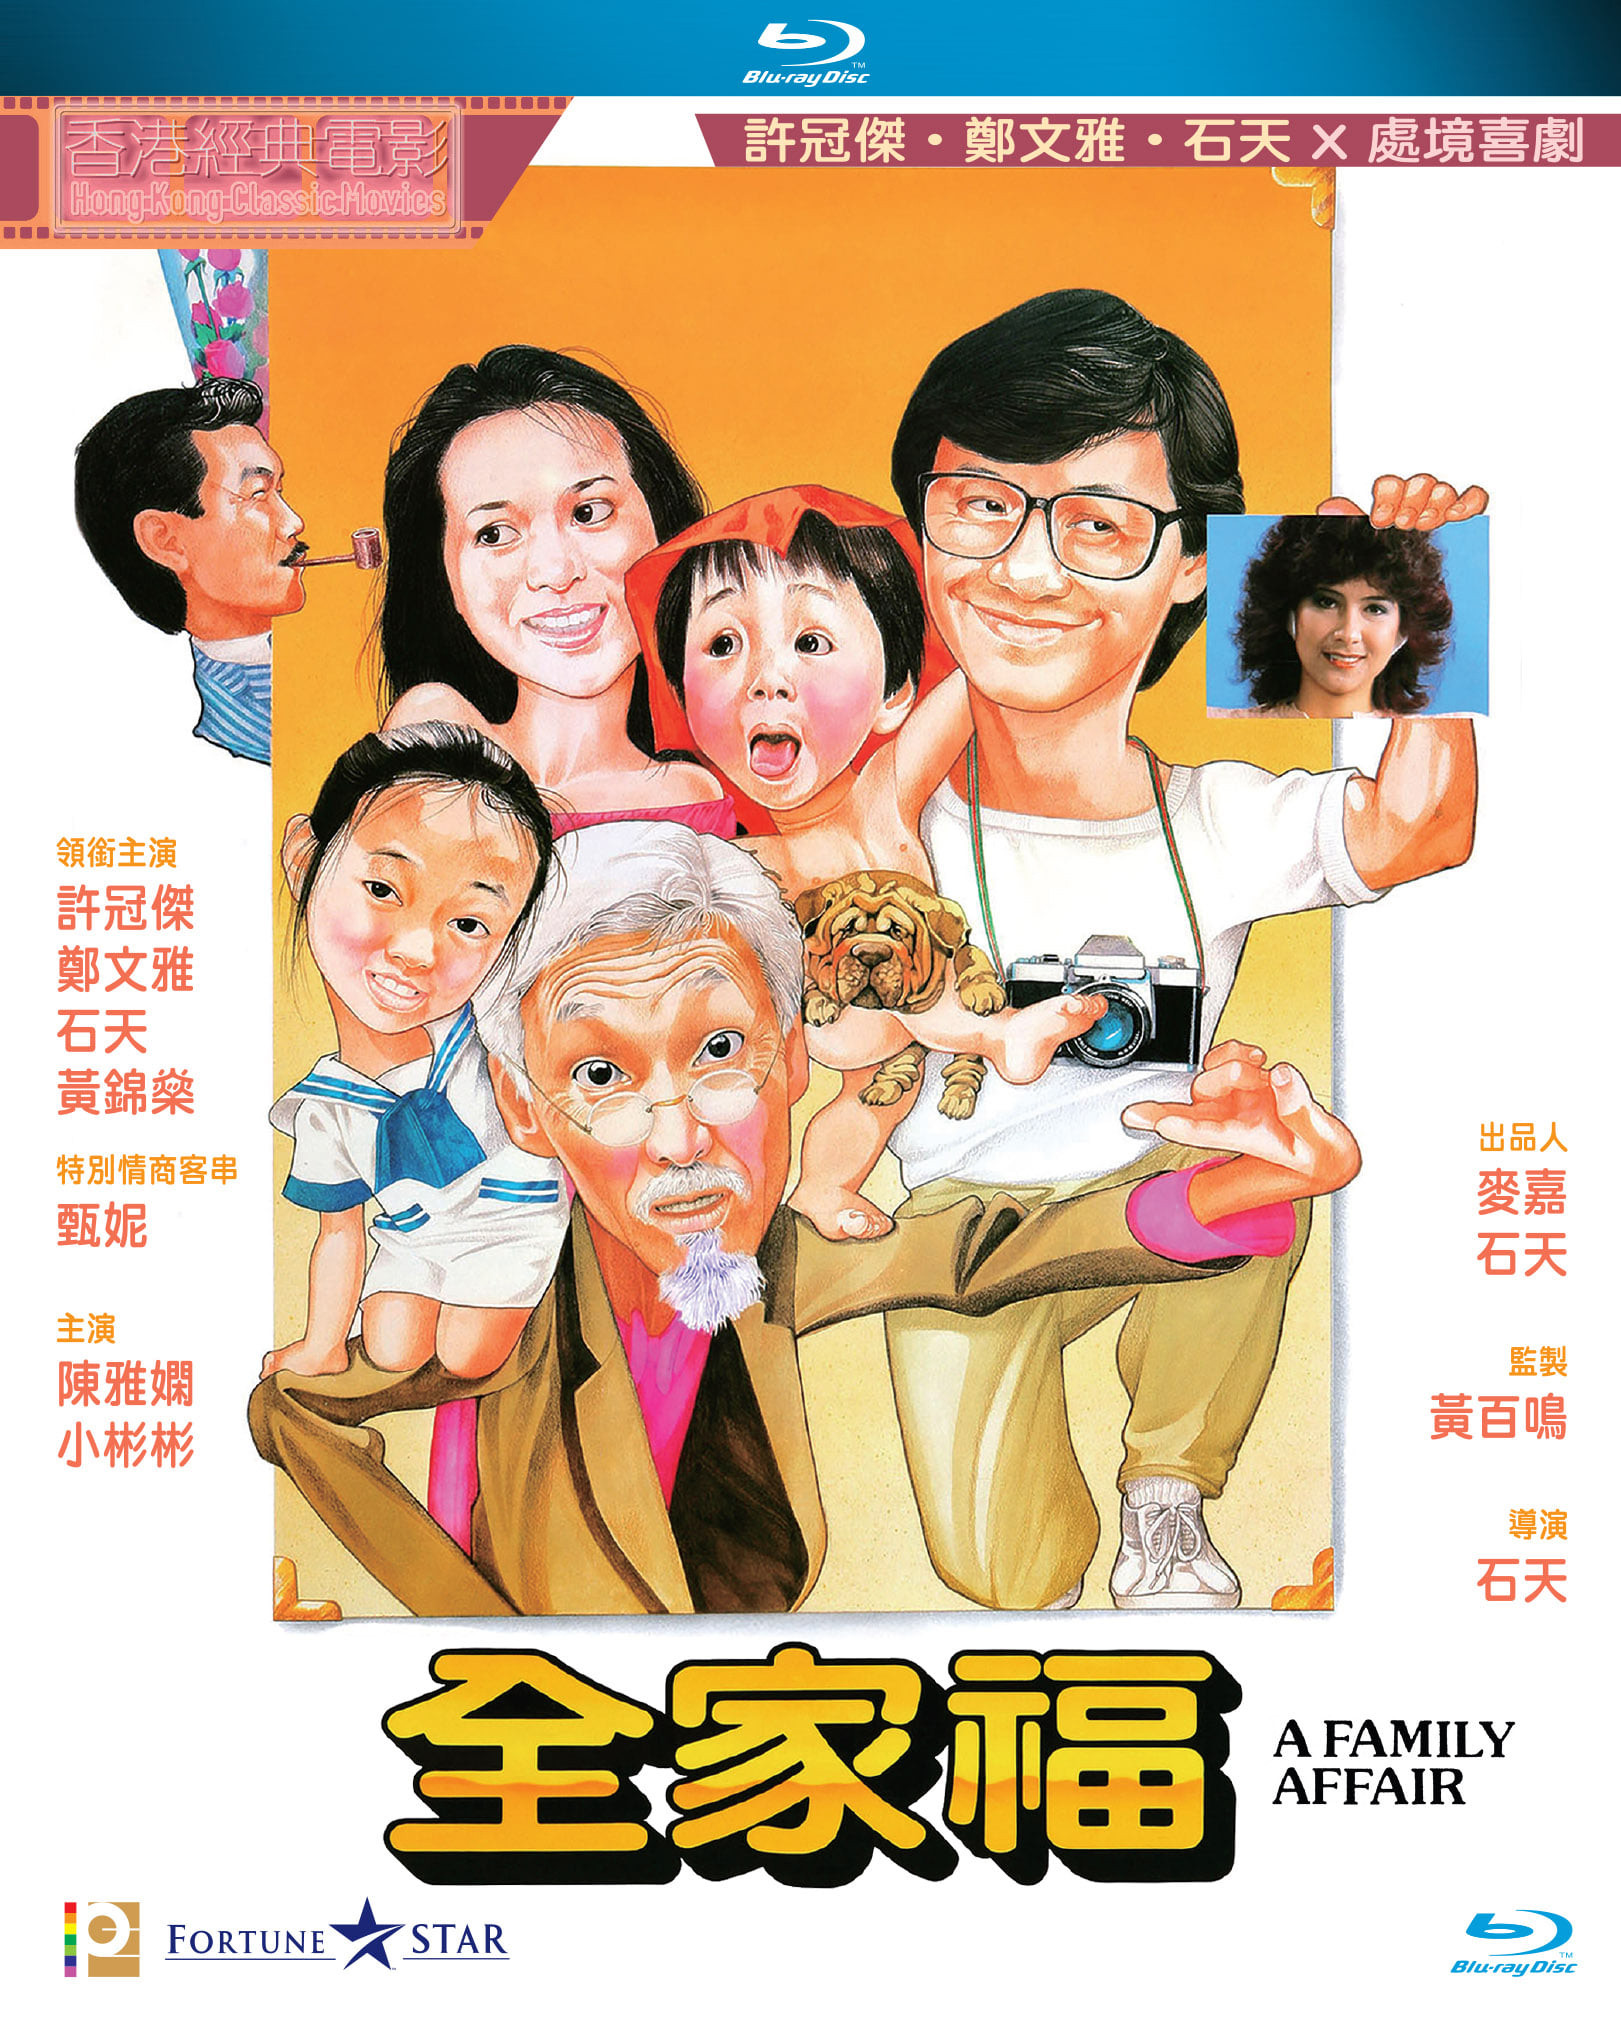 全家福 國粵雙語 原盤繁簡英SUP字幕 A Family Affair 1984 BluRay 1080p 2Audio DTS-HD MA 2 0 x265.10bit-BeiTai